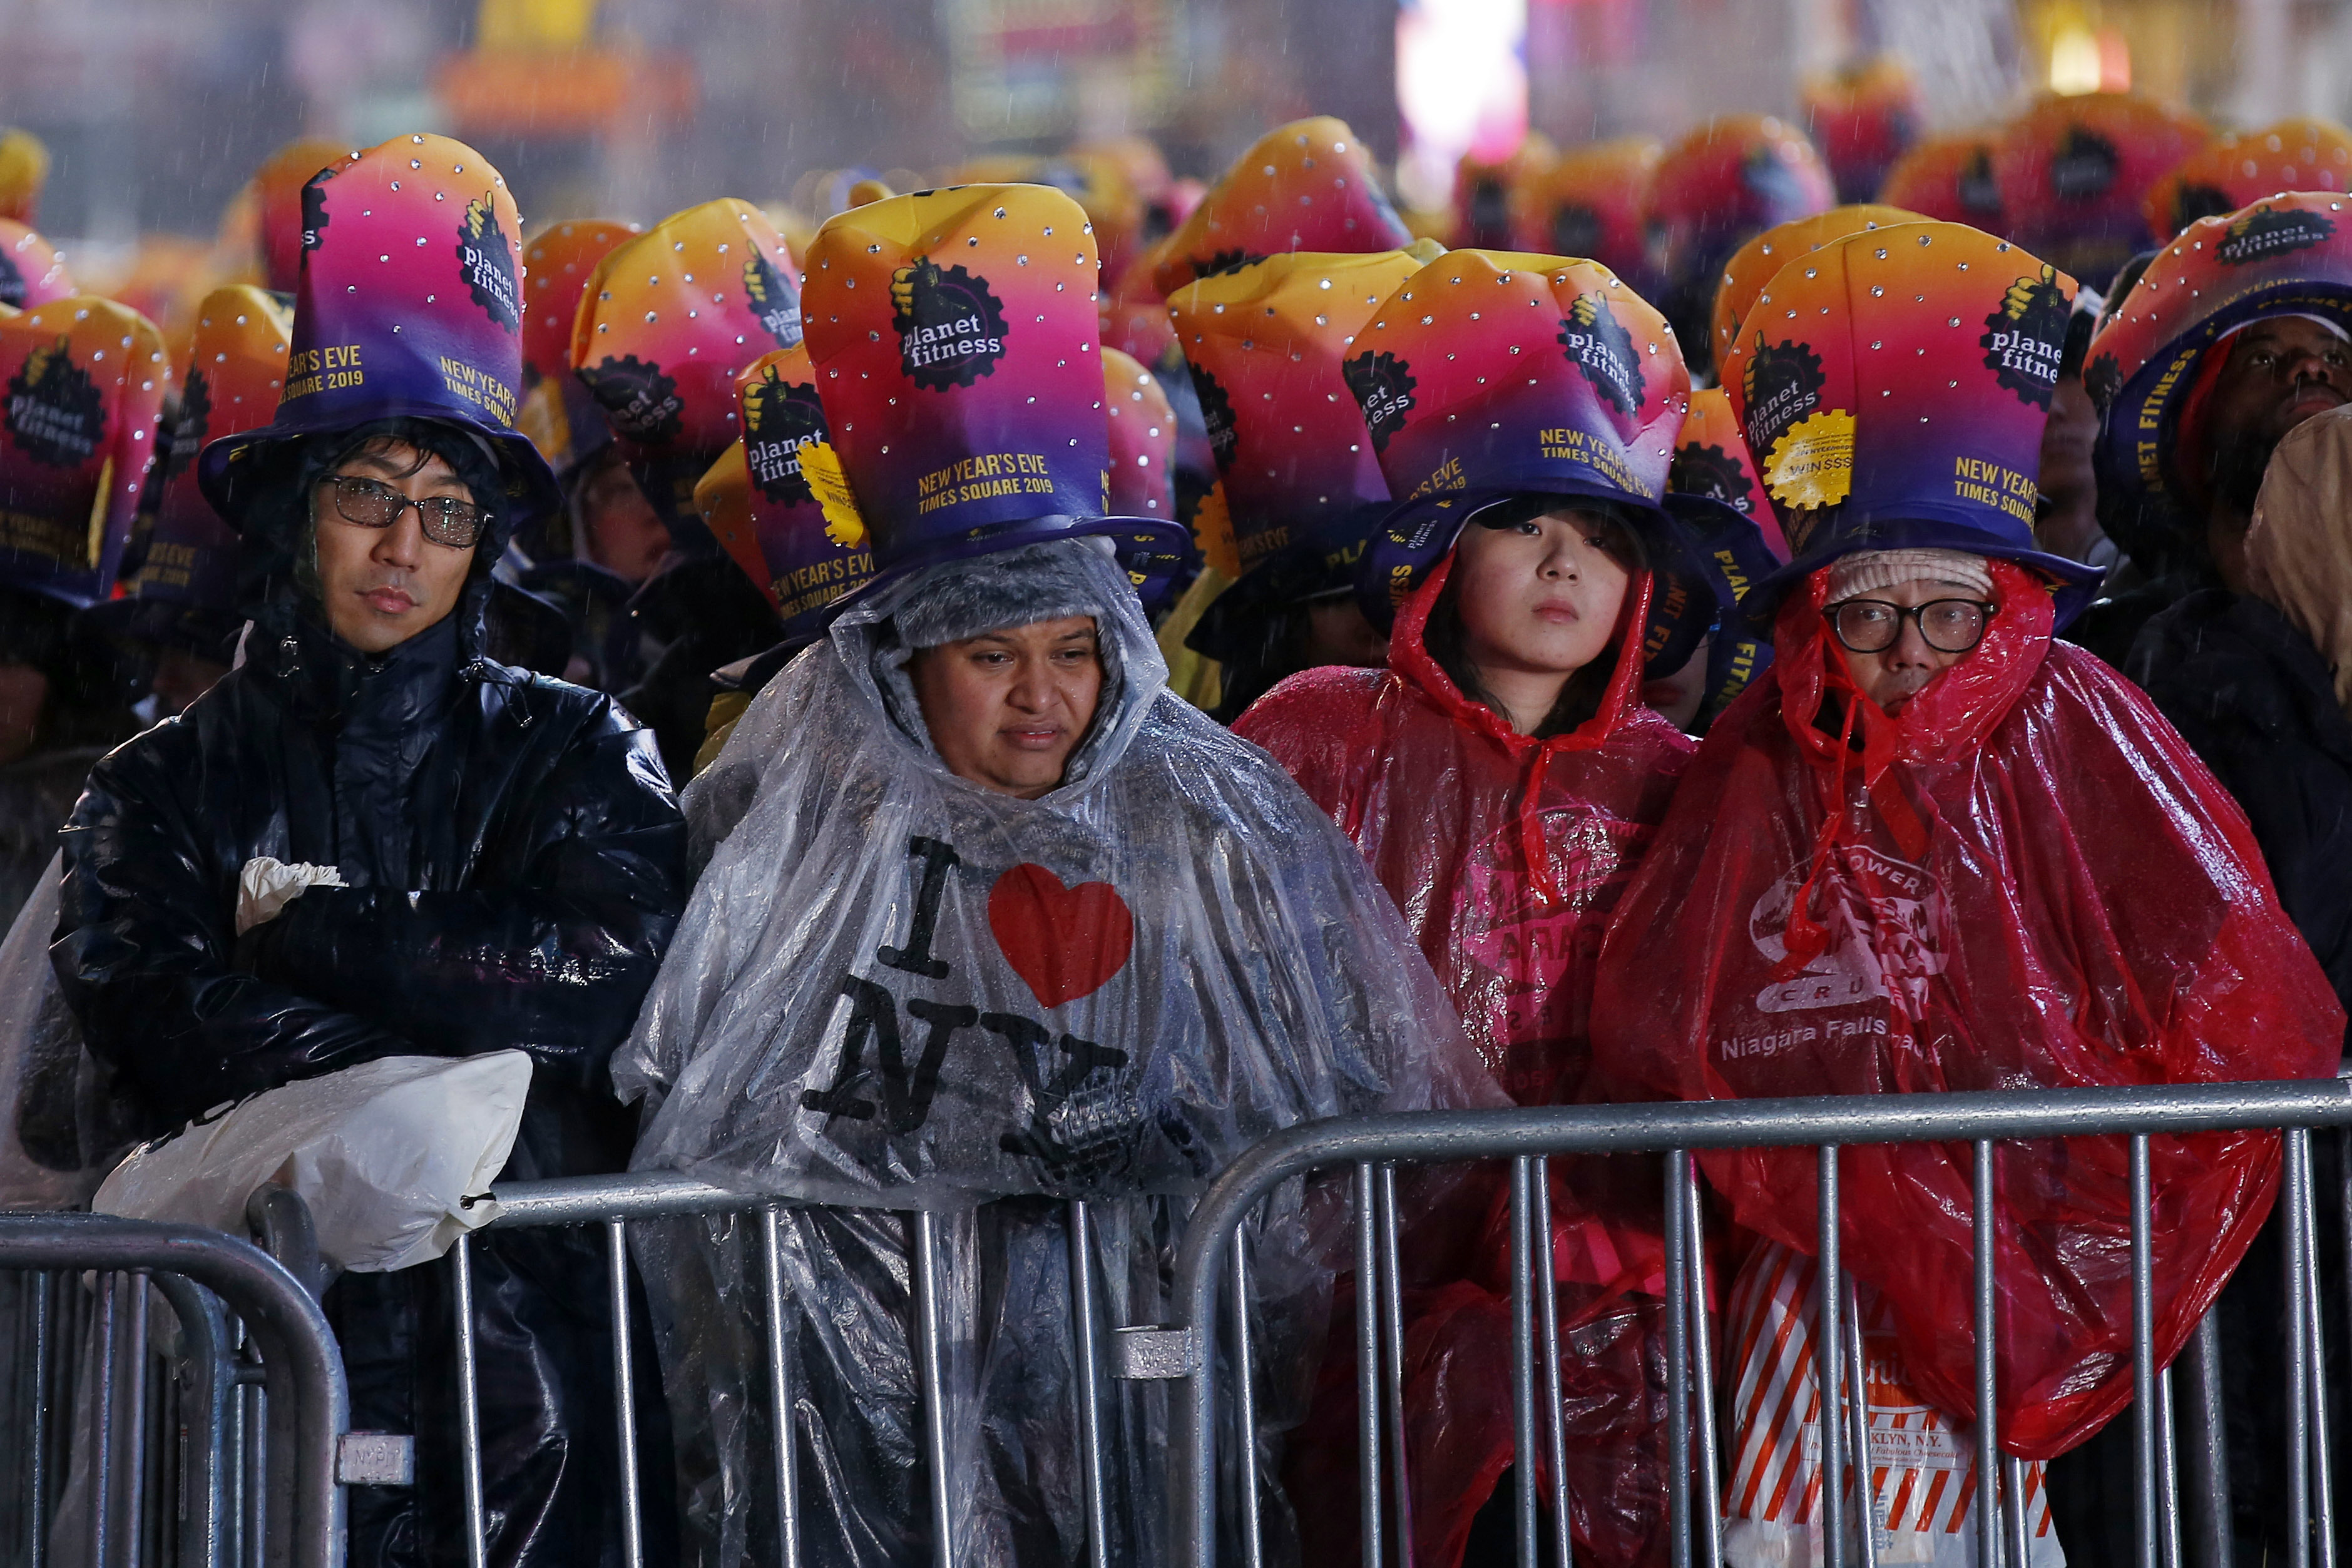 Times Square crowd braves rain to bid wet goodbye to 2018